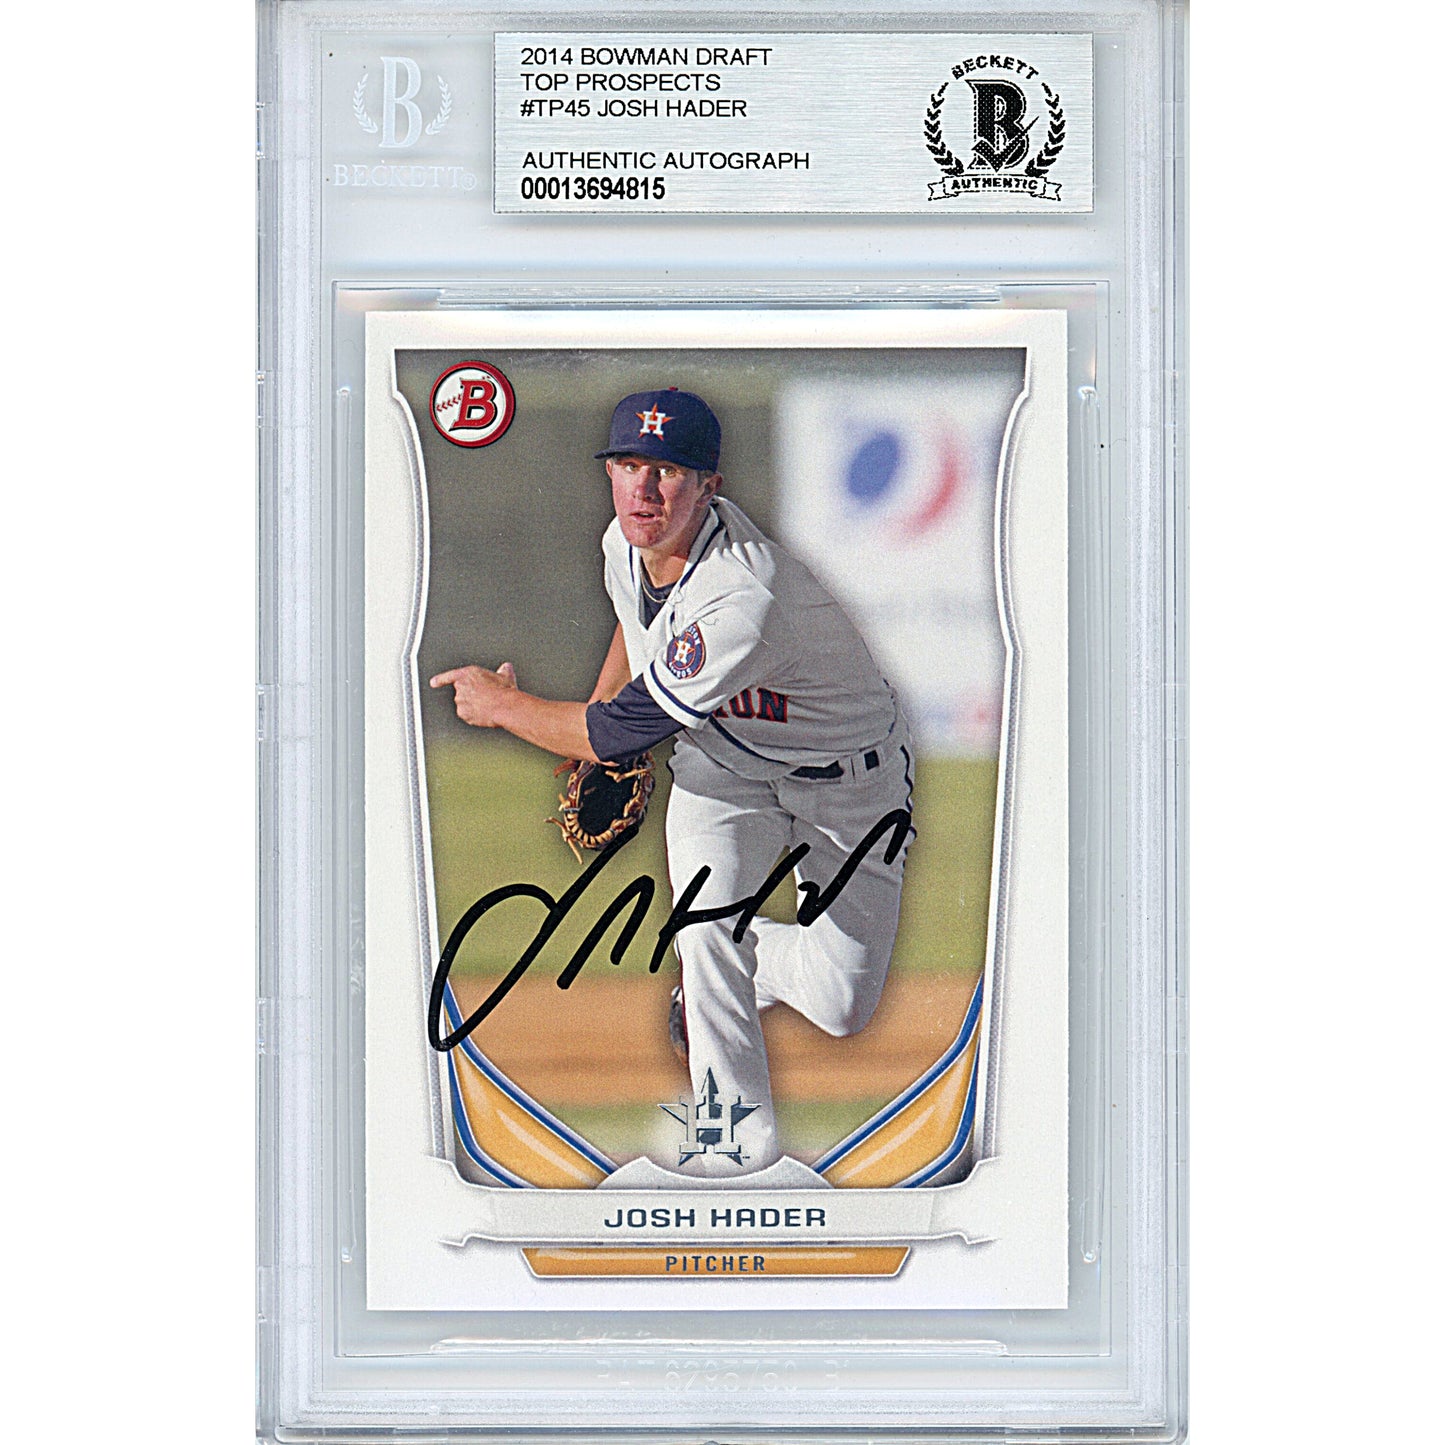 Baseballs- Autographed- Josh Hader Signed Houston Astros 2014 Bowman Draft Top Prospects Baseball Card Beckett Slabbed 00013694815 - 101